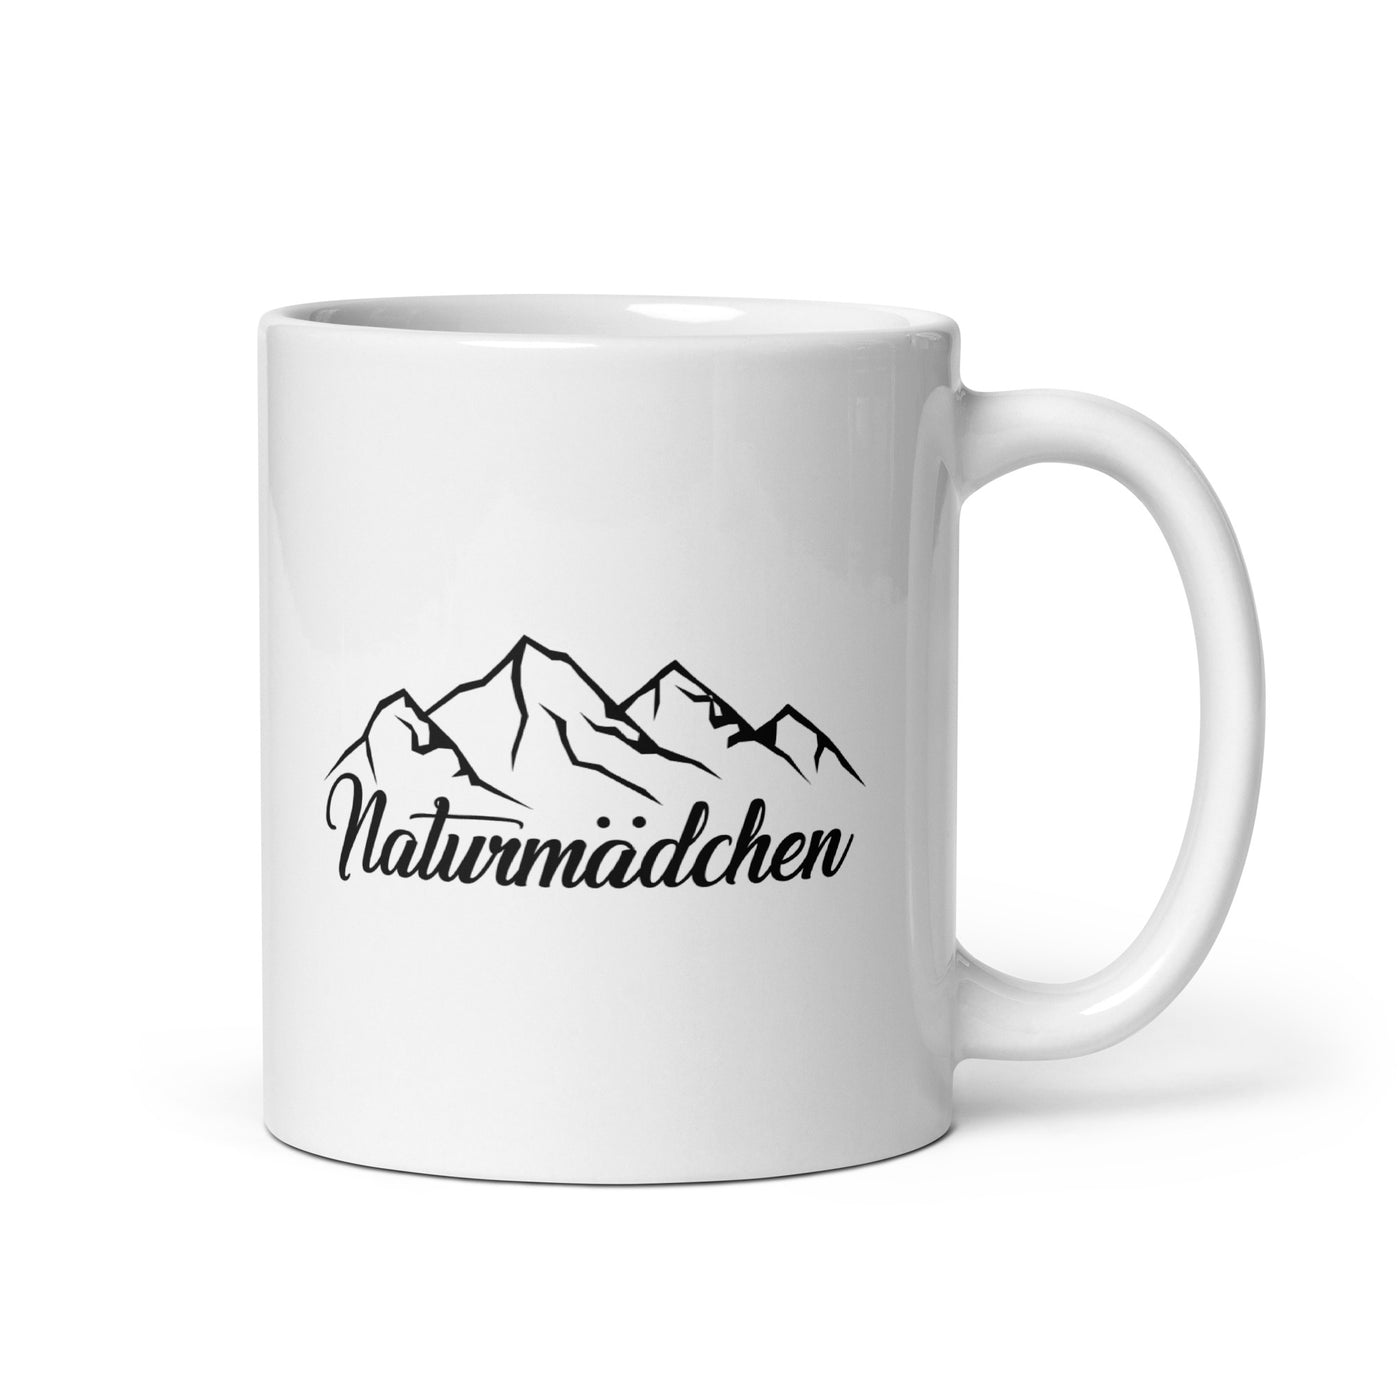 Naturmadchen - Tasse berge